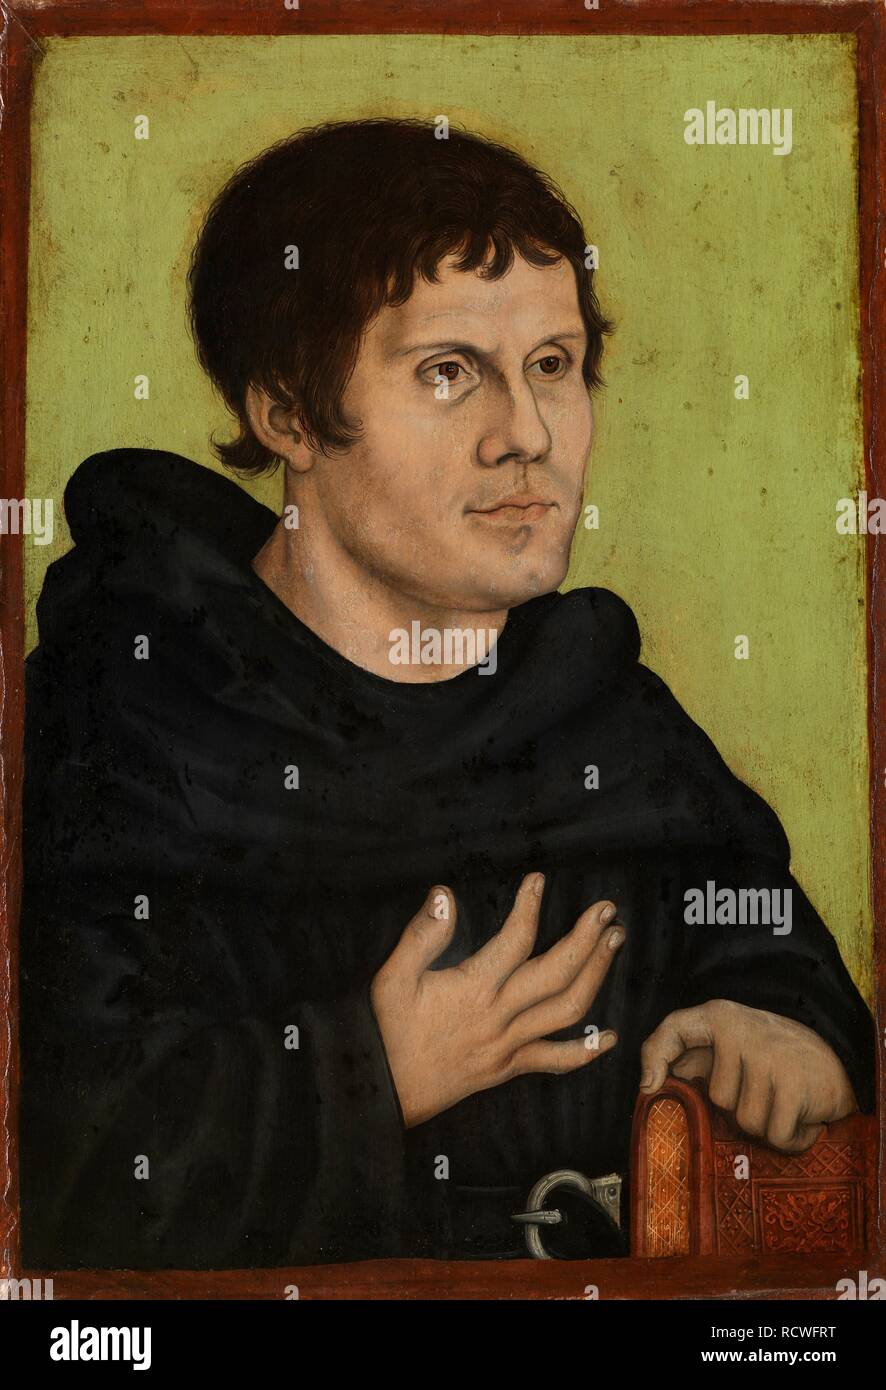 Martin Luther as an Augustinian Monk. Museum: Germanisches Nationalmuseum, Nuremberg. Author: Cranach, Lucas, the Elder. Stock Photo